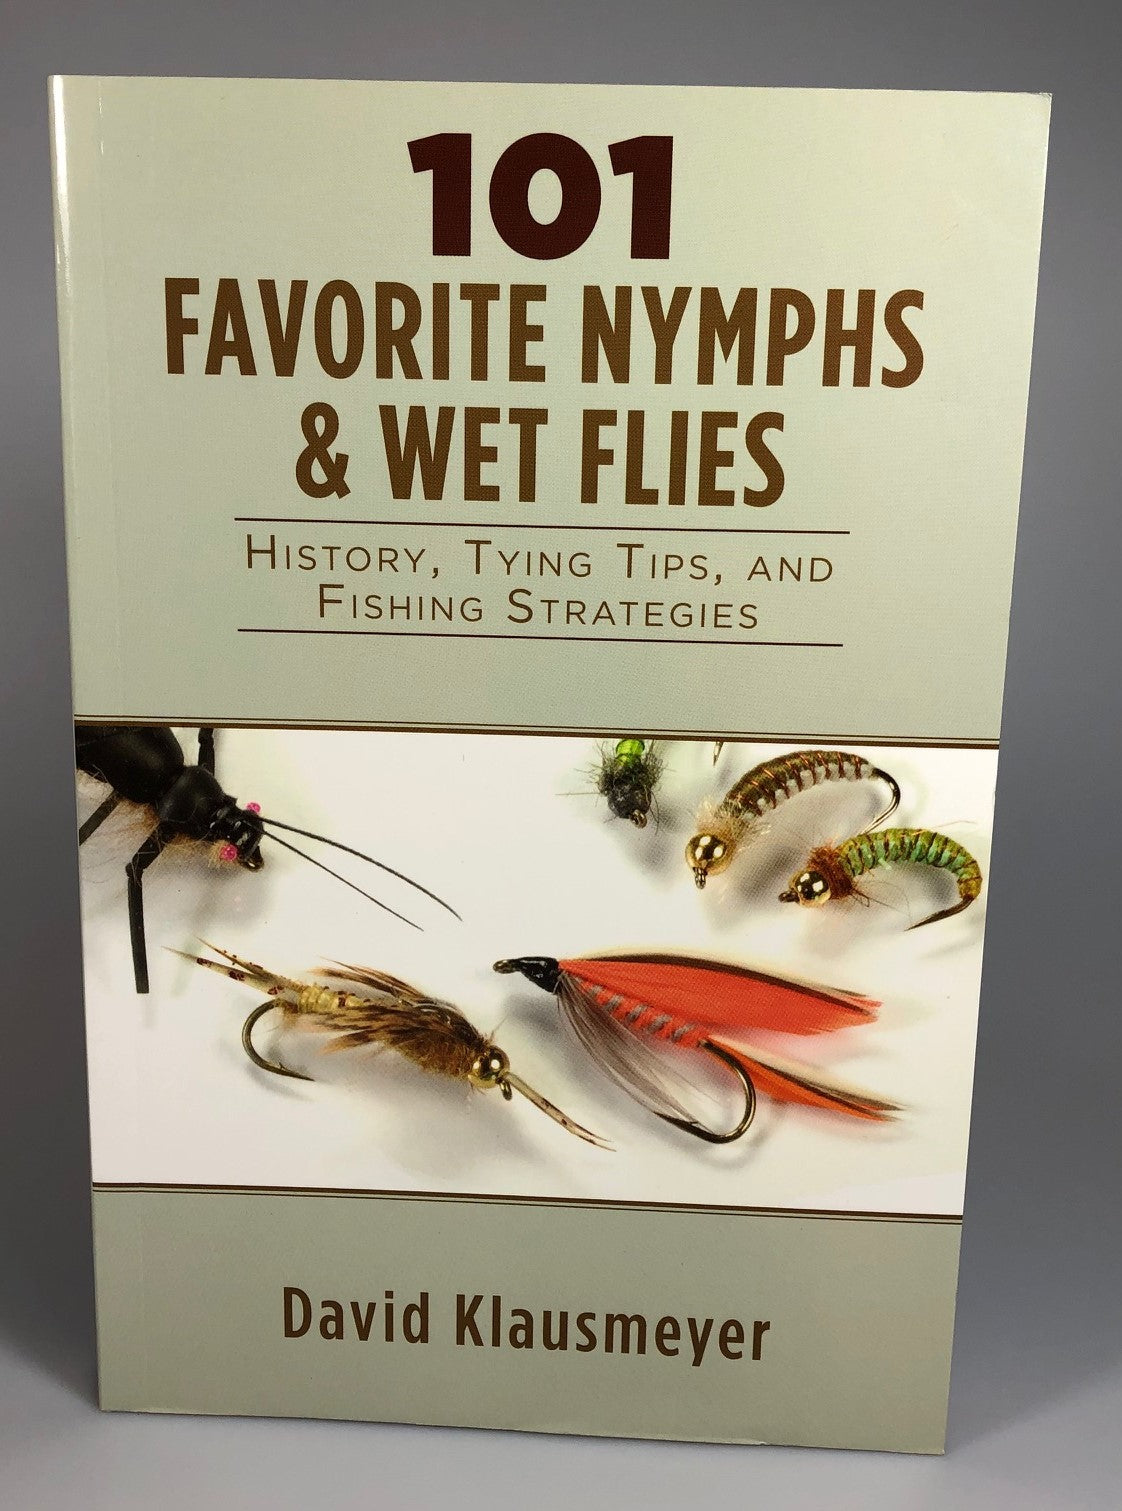 101 Favorite Nymphs & Wet Flies by David Klausmeyer